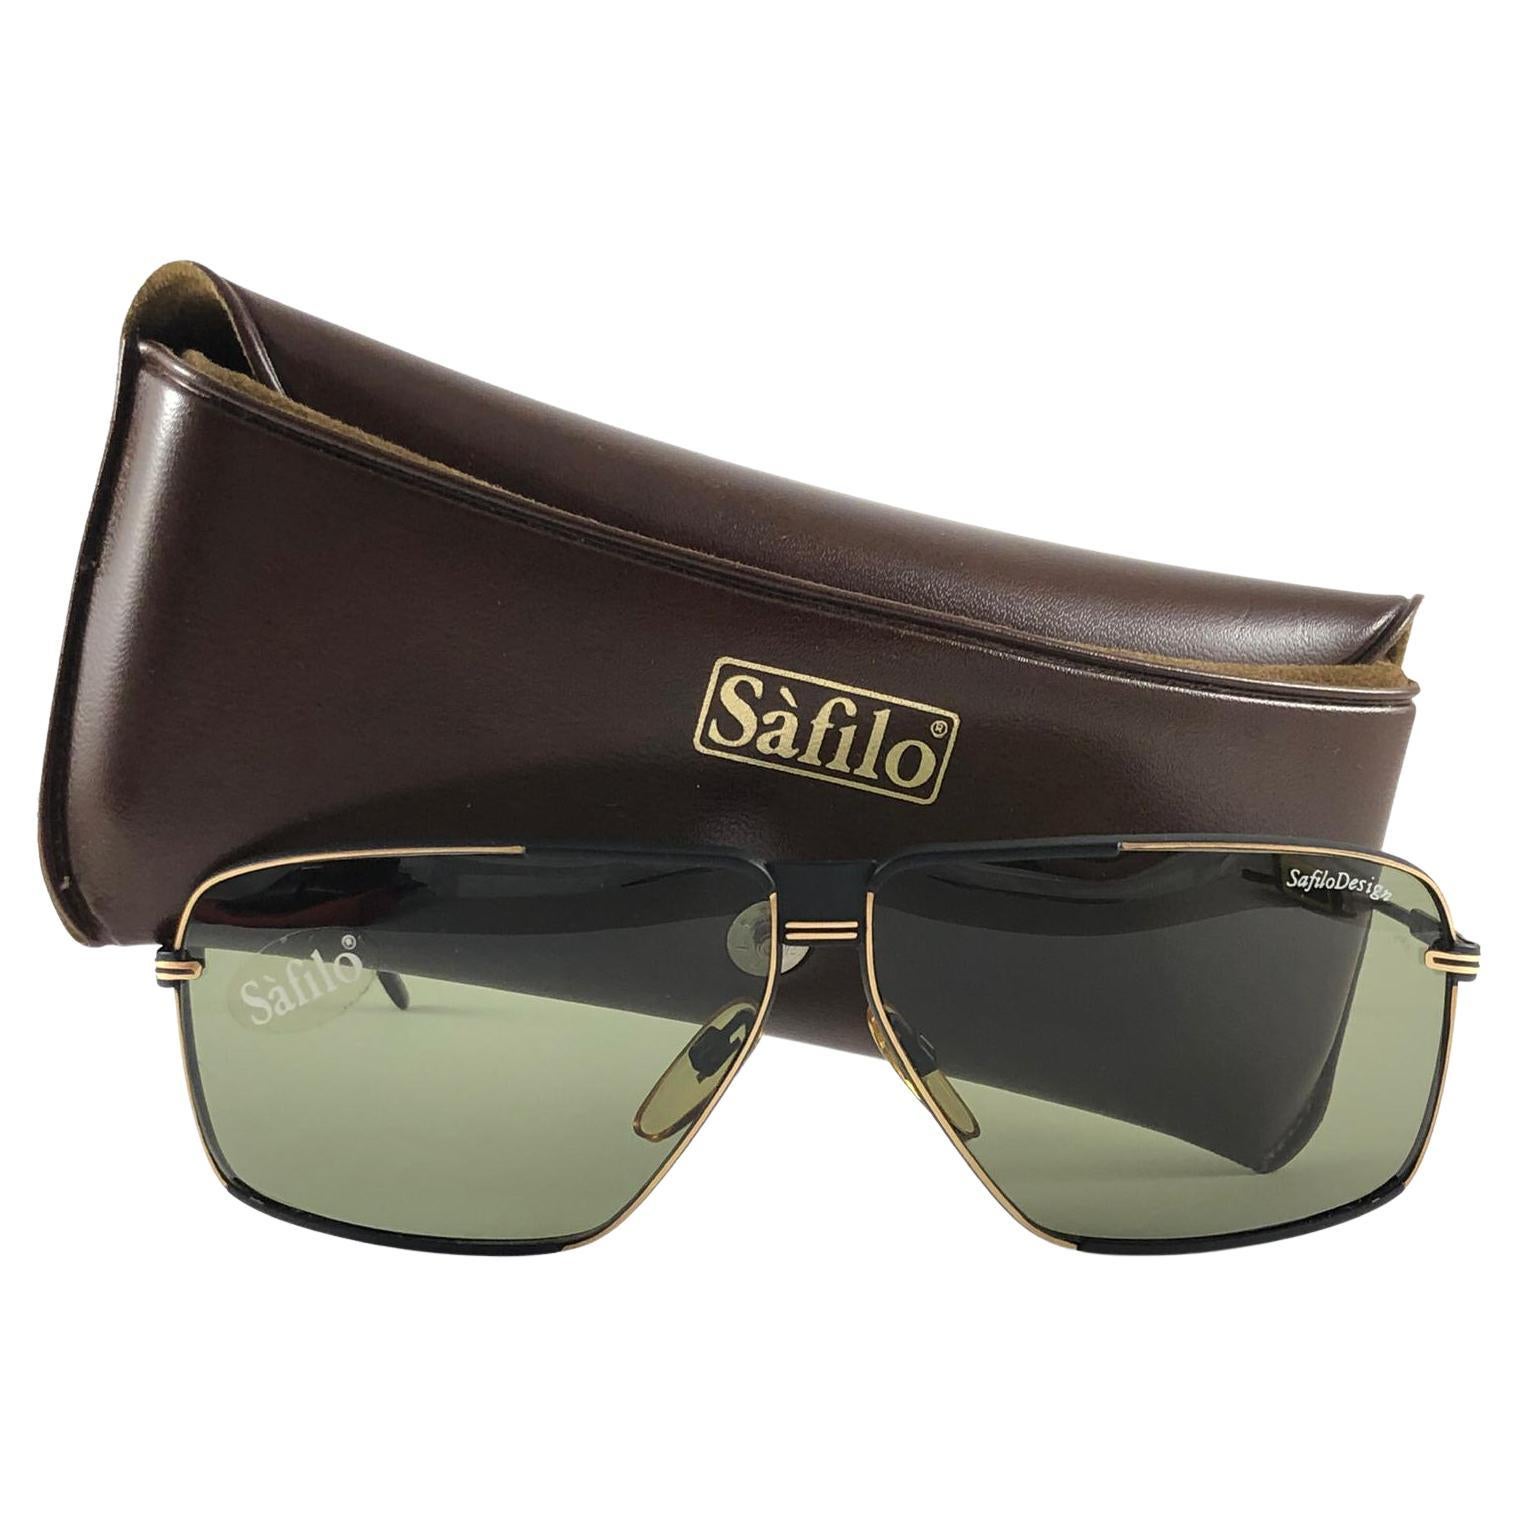 New Vintage Safilo Design 04 Black Mate Aviator 1980's Sunglasses Made in Italy For Sale